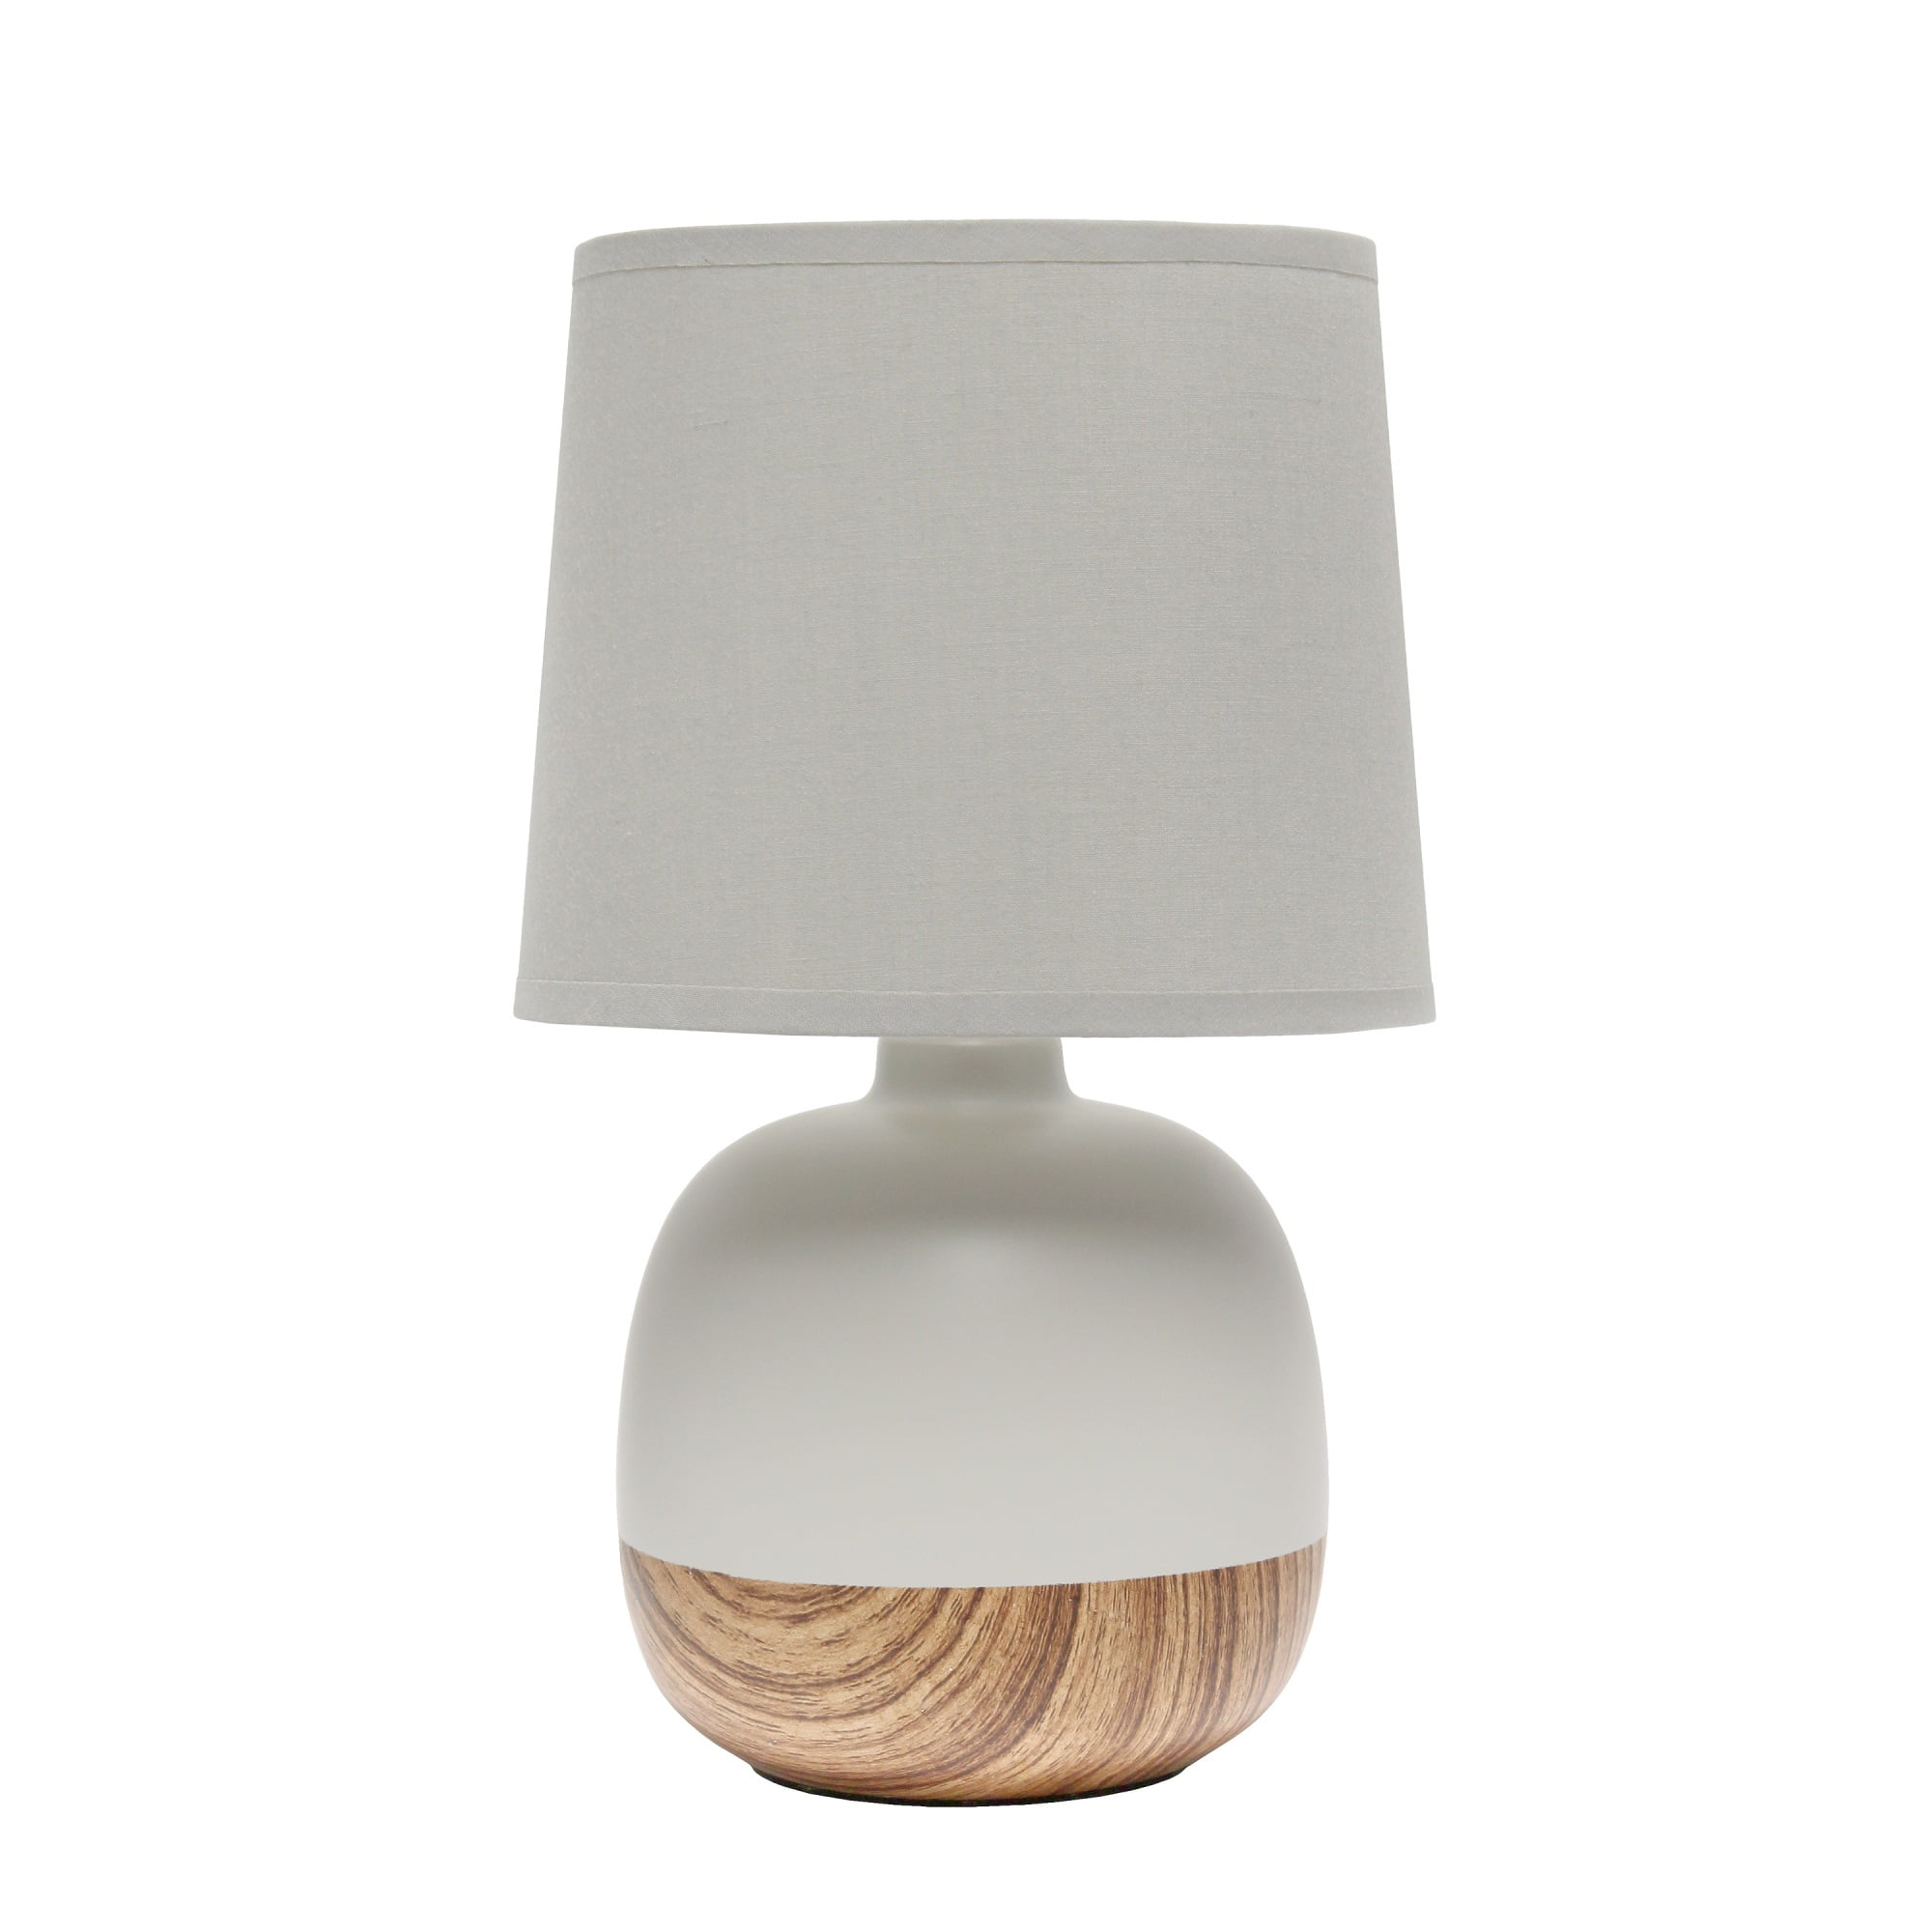 Simple Designs Petite Mid Century Table Lamp, Light Wood and Light Gray